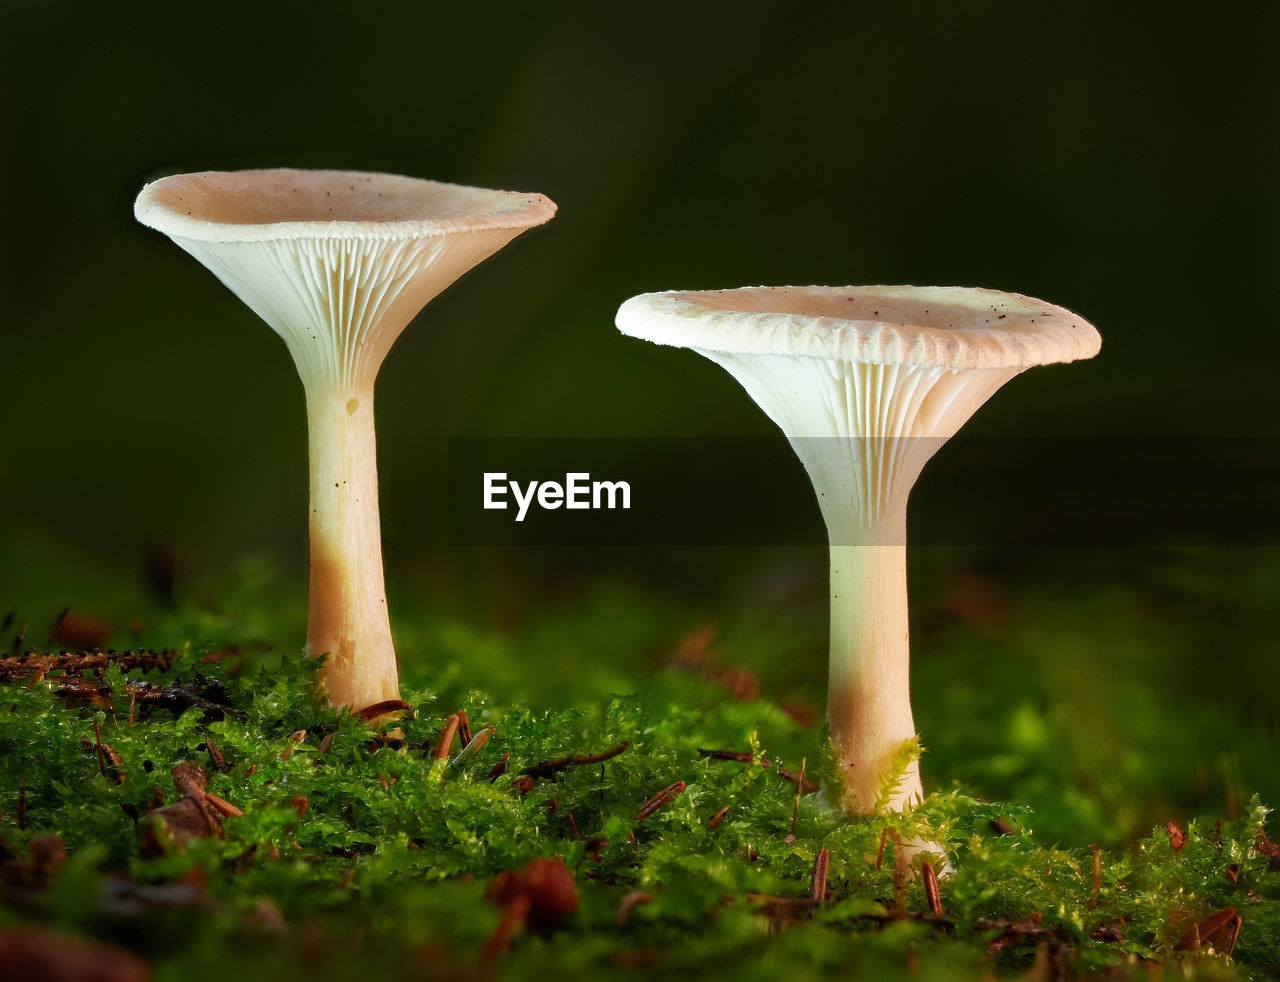 Close-up of mushrooms growing on grass